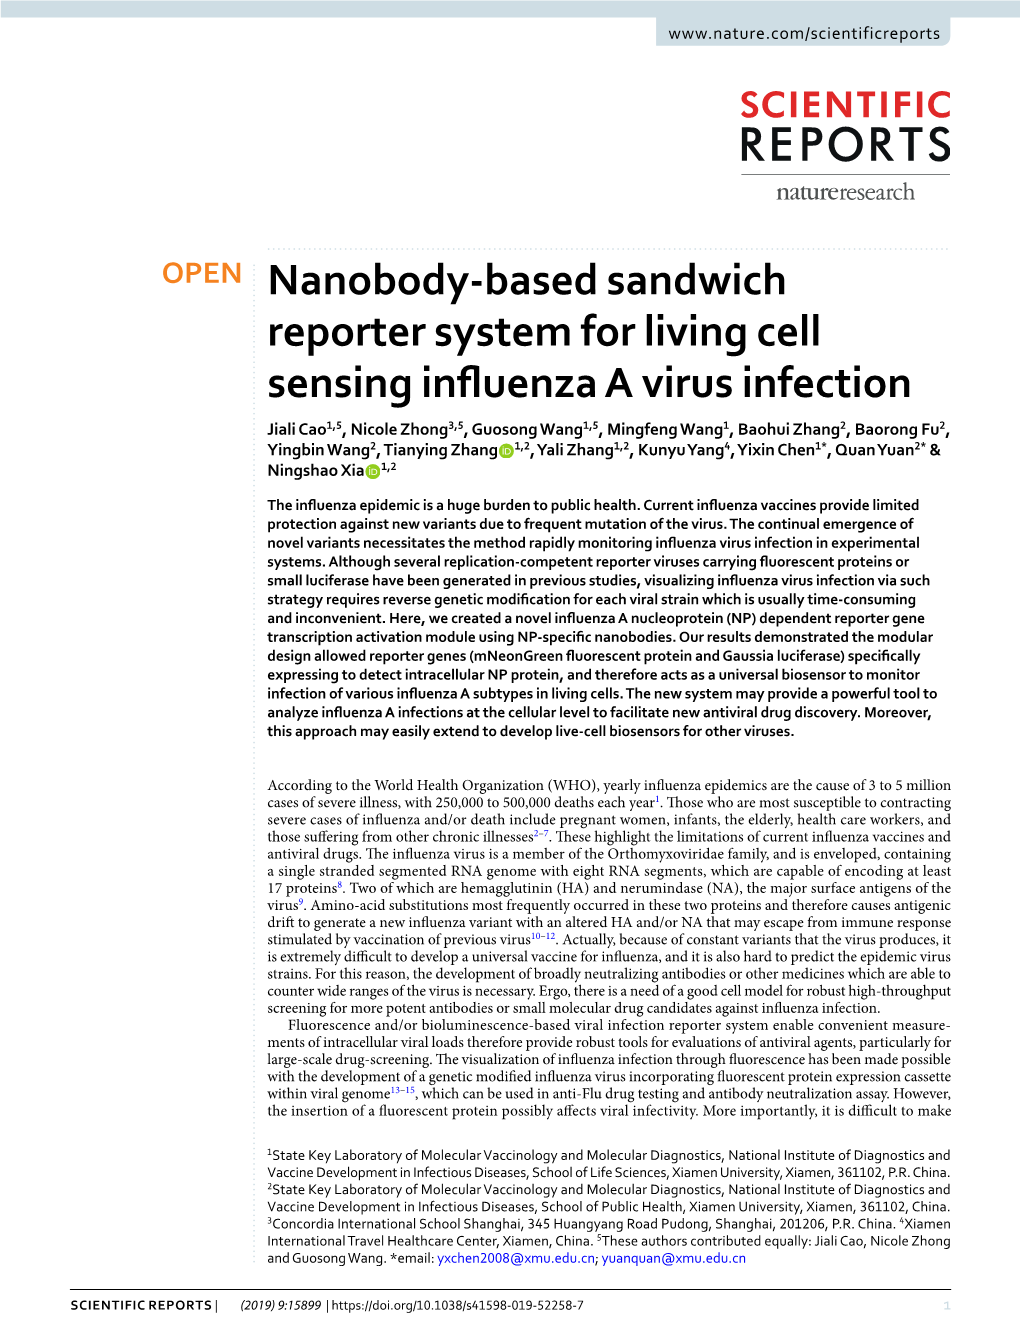 Nanobody-Based Sandwich Reporter System for Living Cell Sensing Influenza a Virus Infection